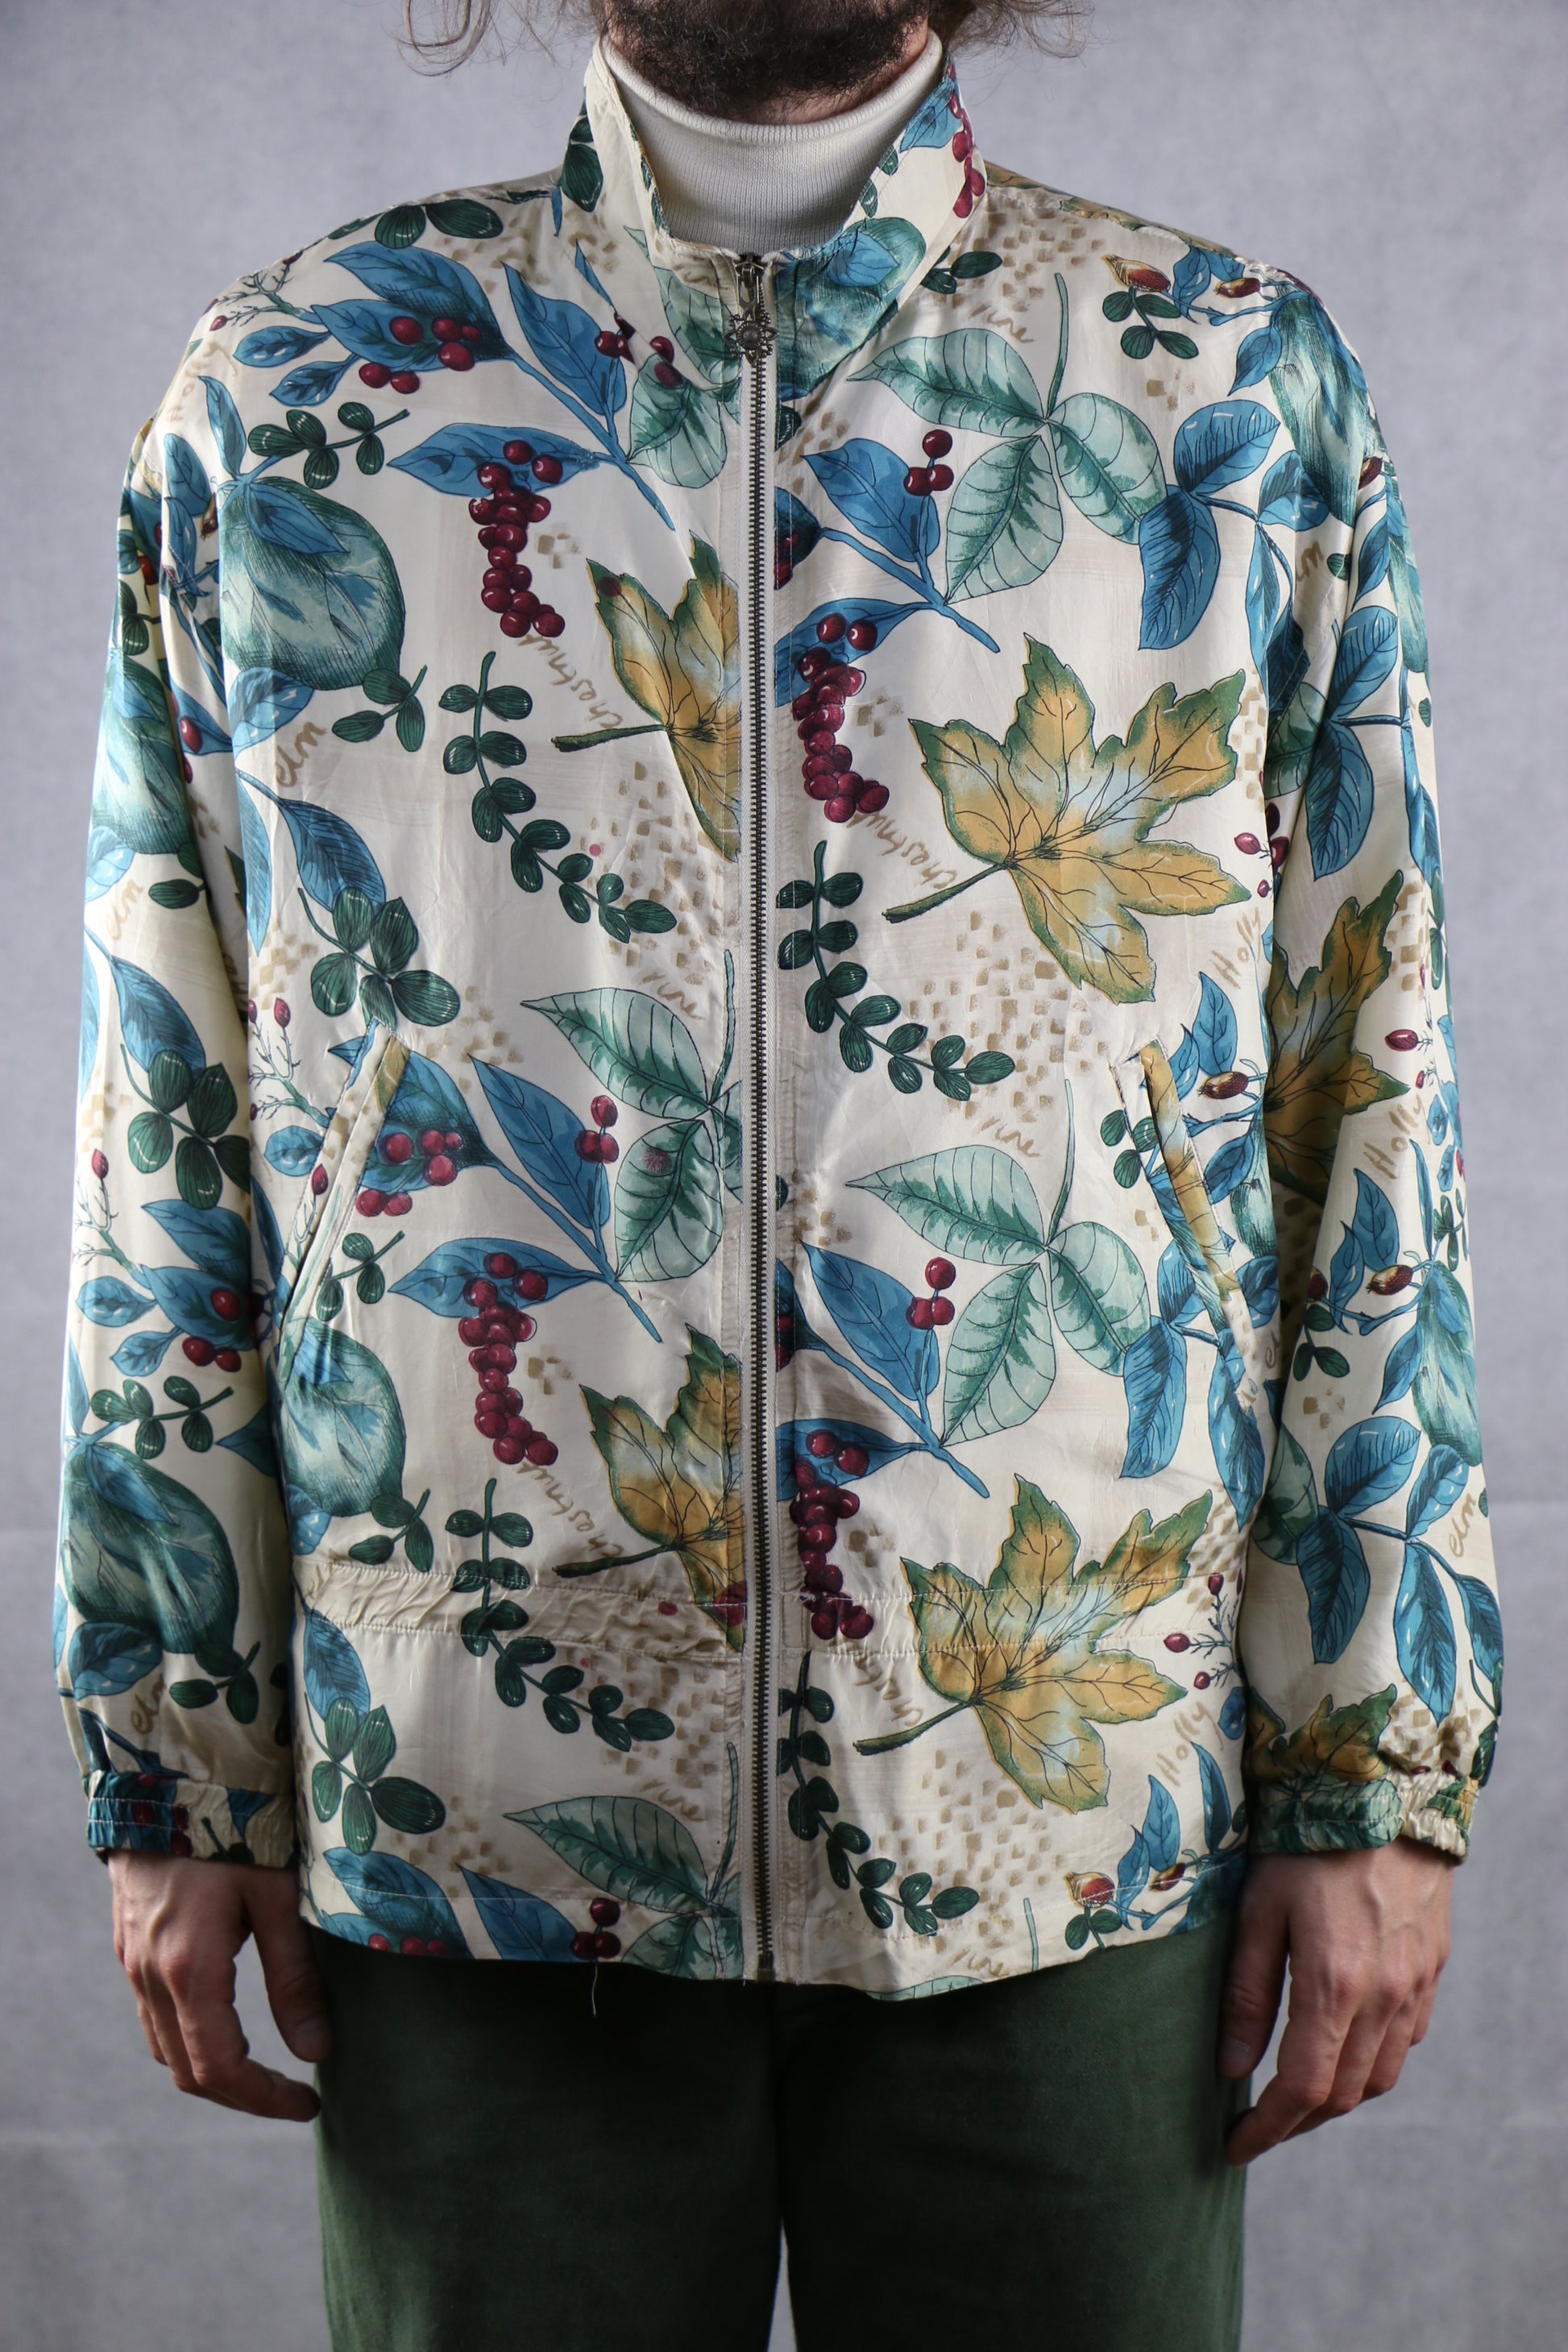 East West Silk Jacket - vintage clothing clochard92.com